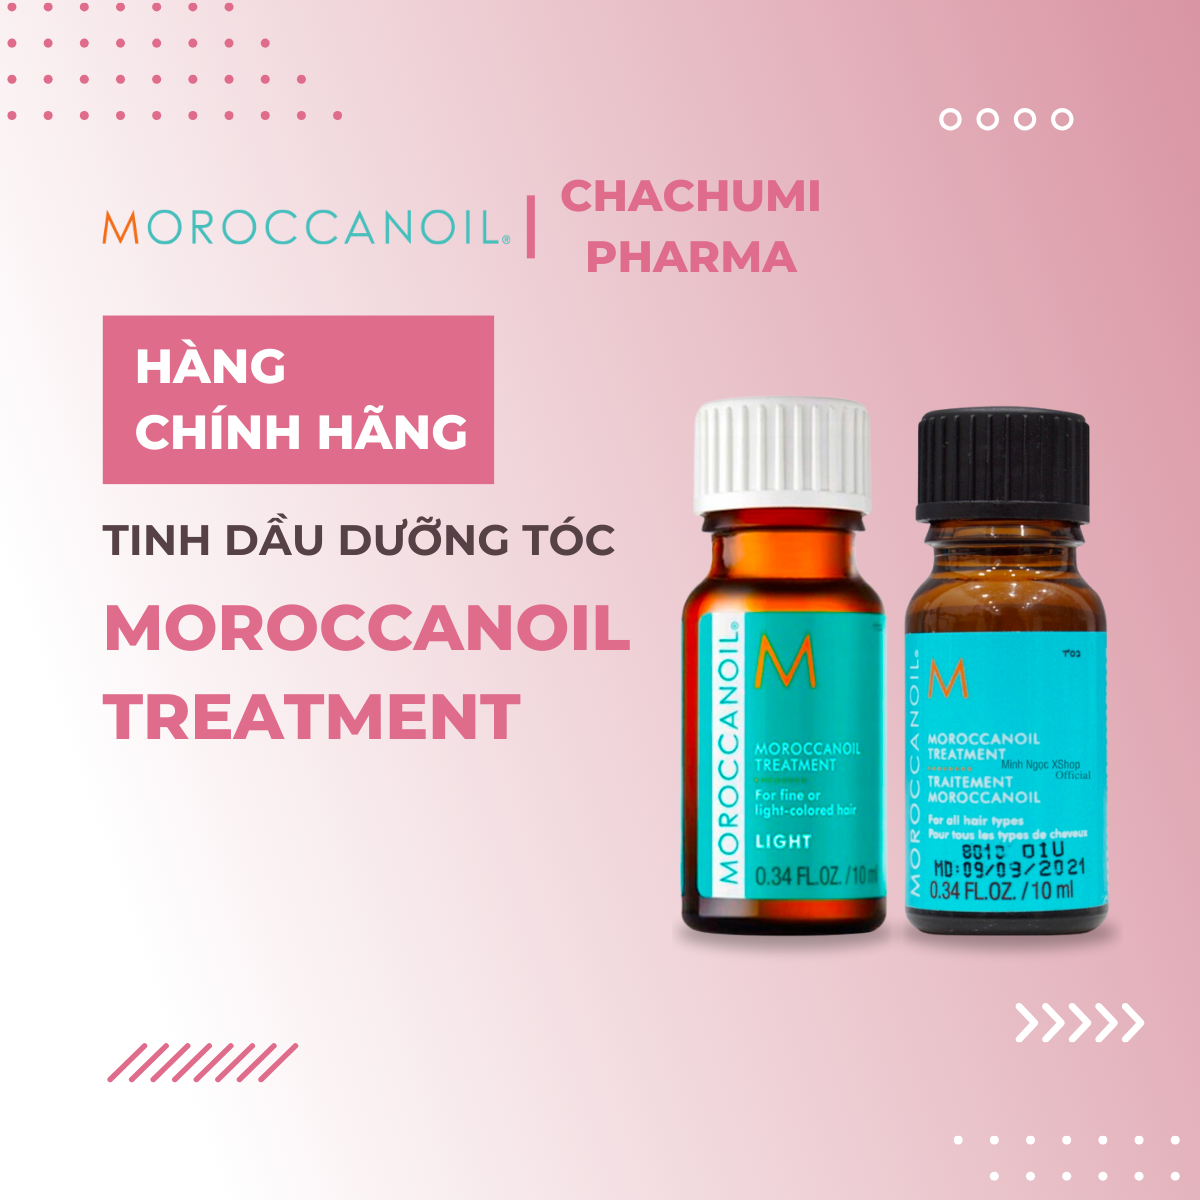 Moroccanoil treatment minisize 10ML - Tinh dầu dưỡng tóc